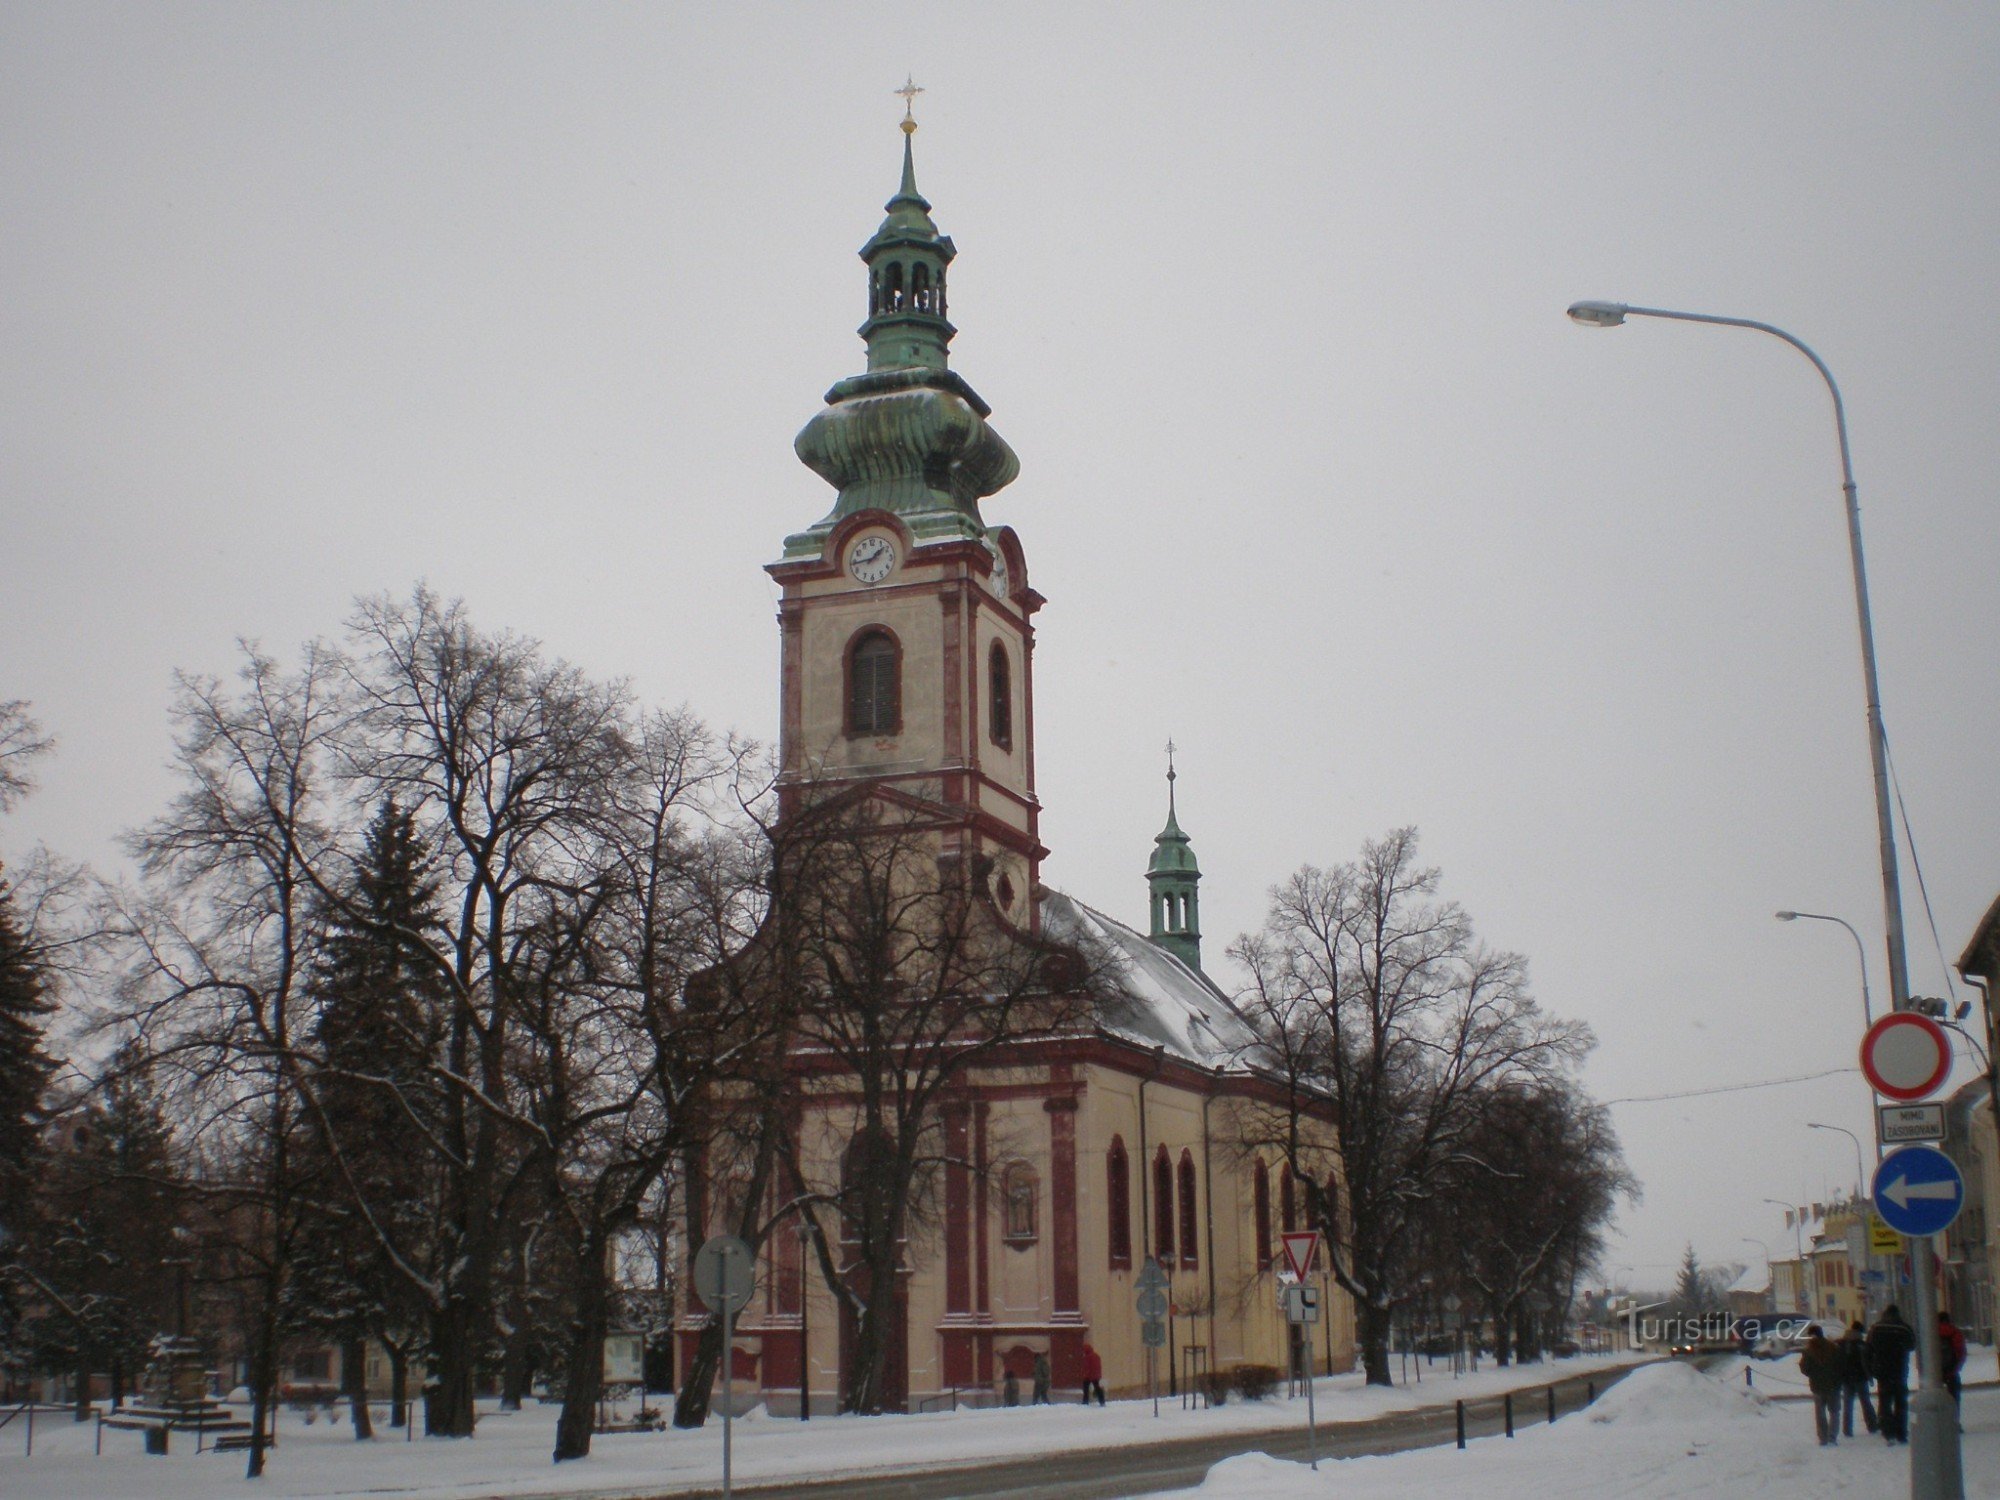 Kostelec nad Černými lesy - 广场上有圣彼得教堂。 守护天使